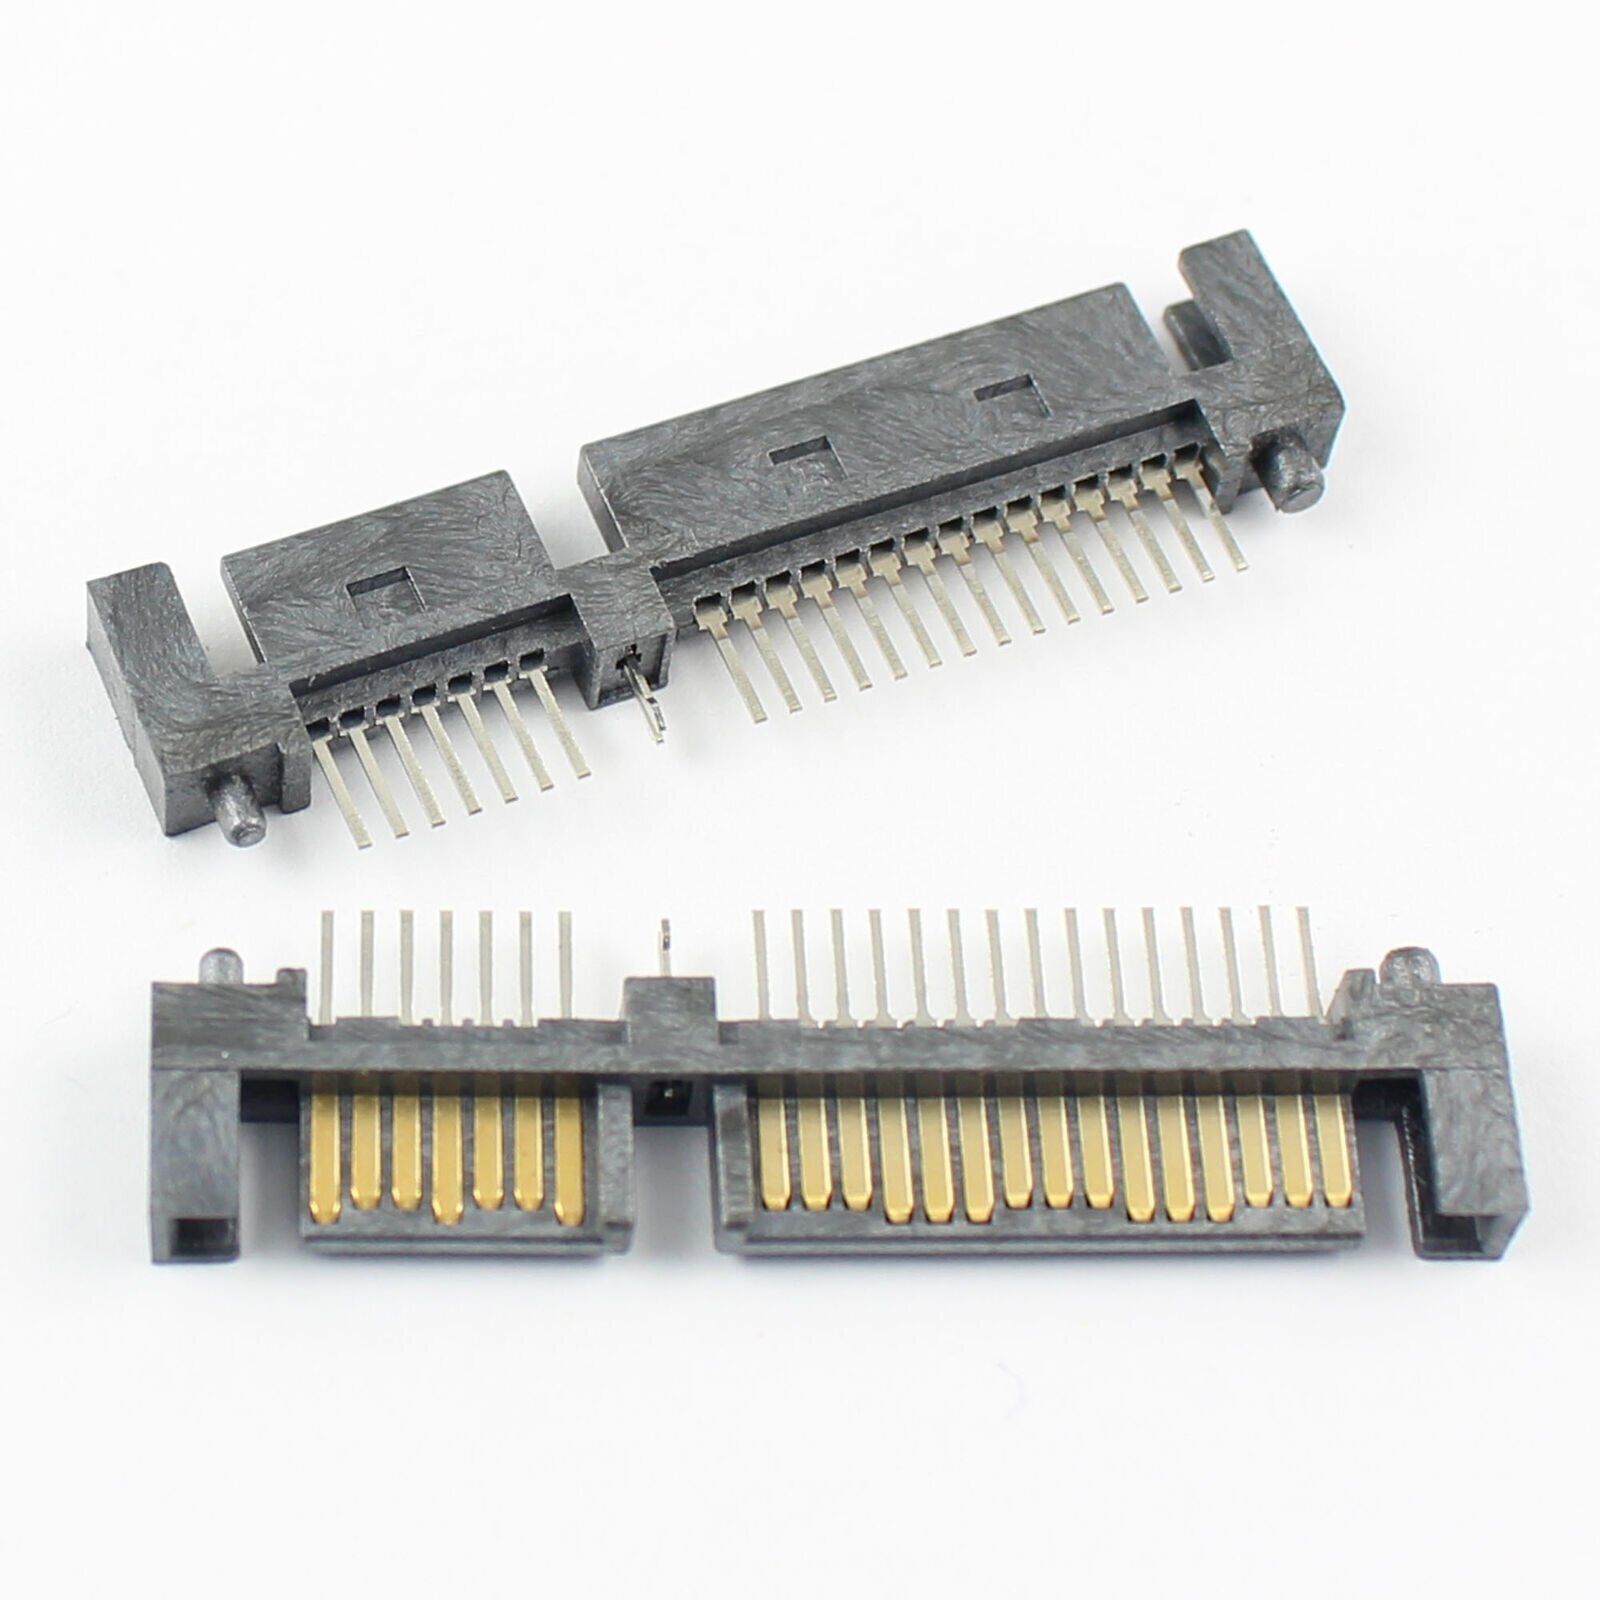 2Pcs Sata 7+15 Pin 22 Pin Straight Male Adapter Connector For Hard Drive HDD